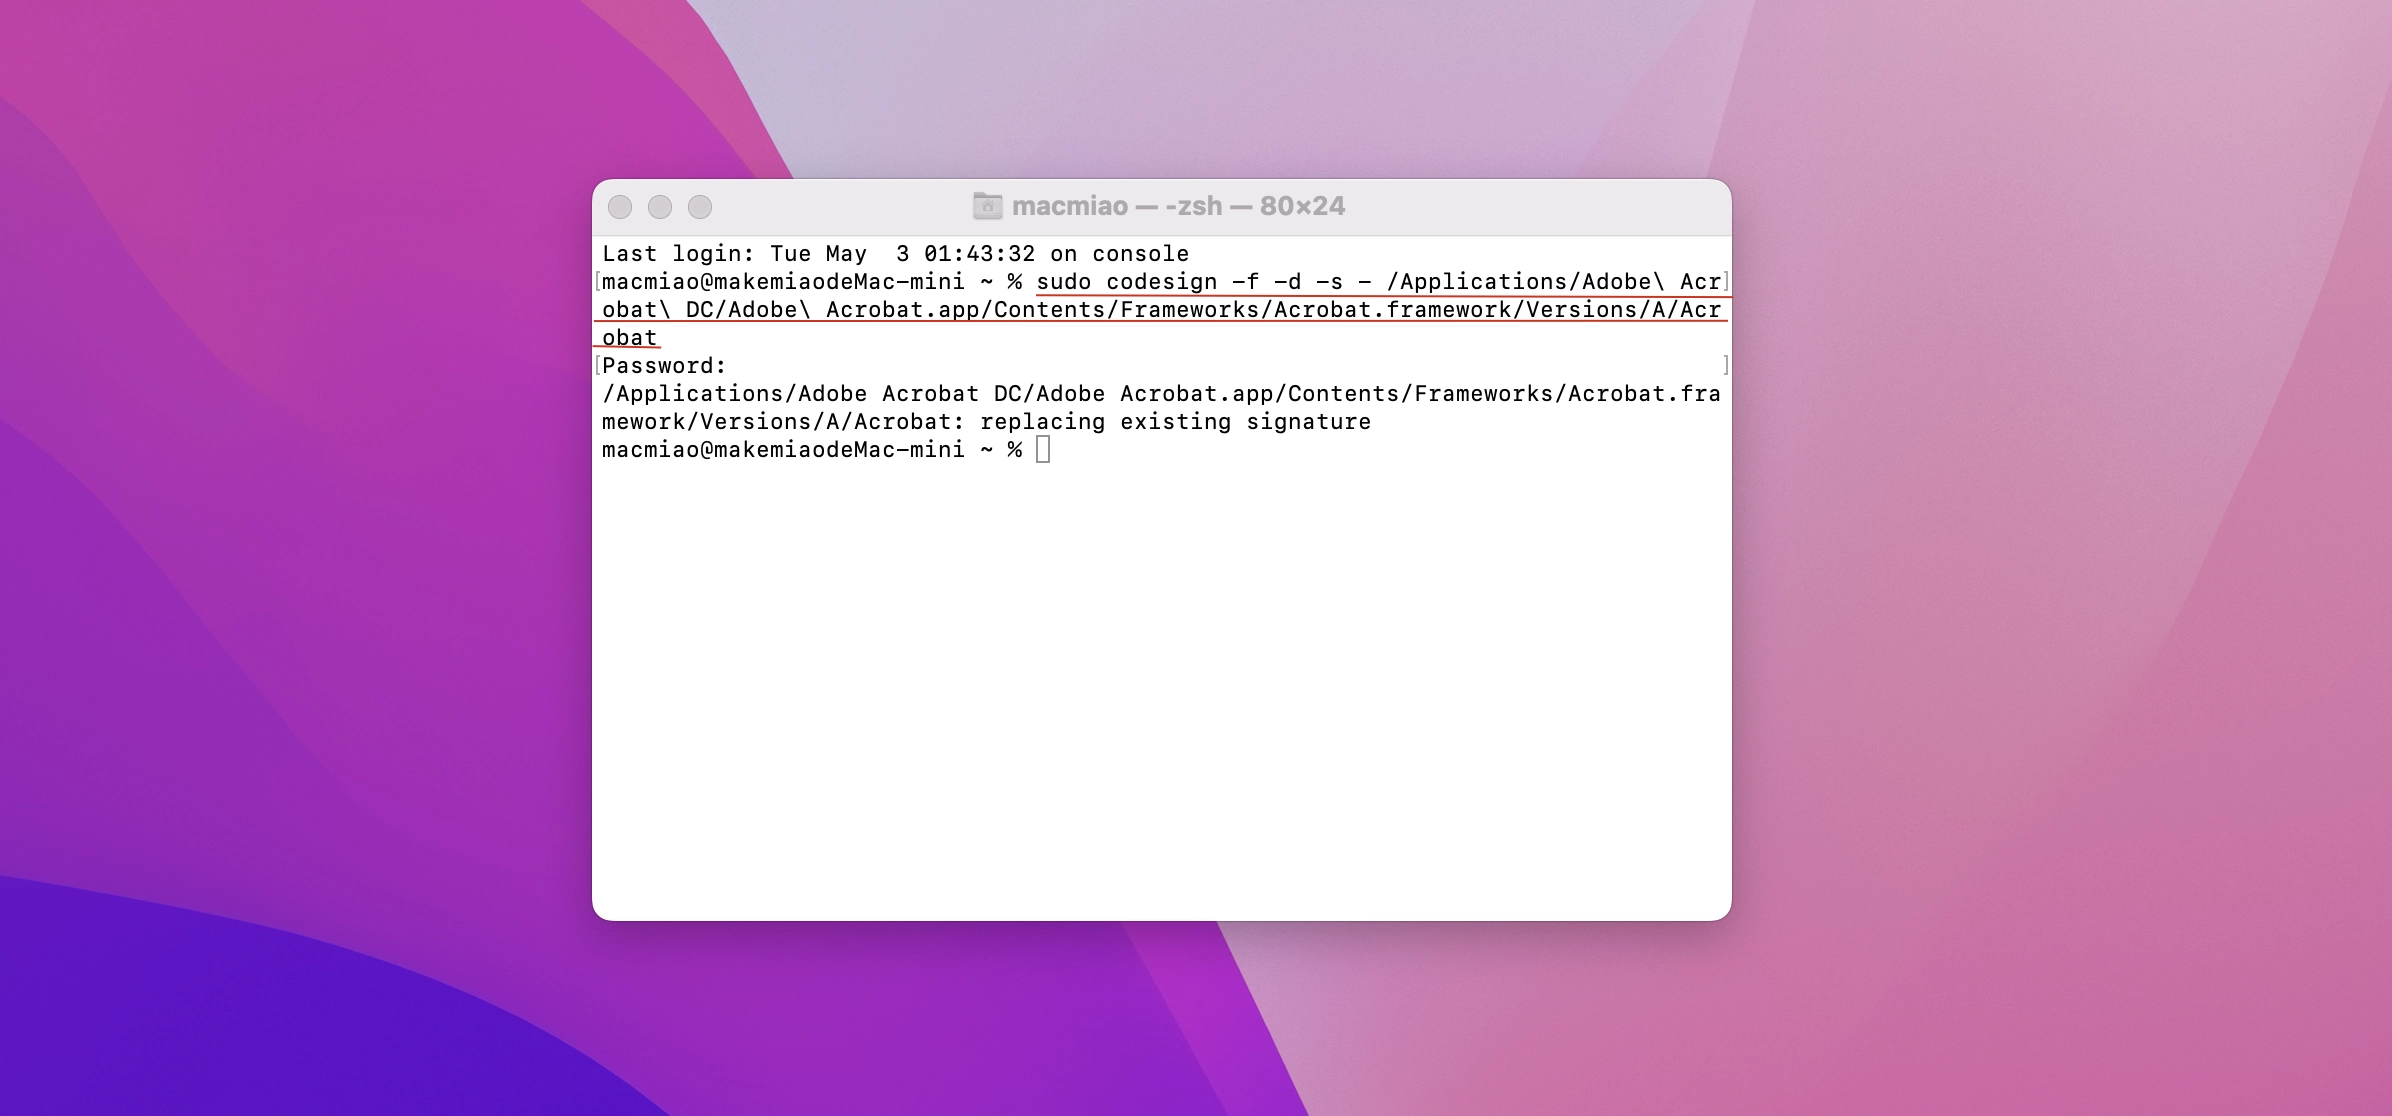 DC软件|Adobe Acrobat Pro DC v2023.003.20244 Mac中文破解版安装包下载